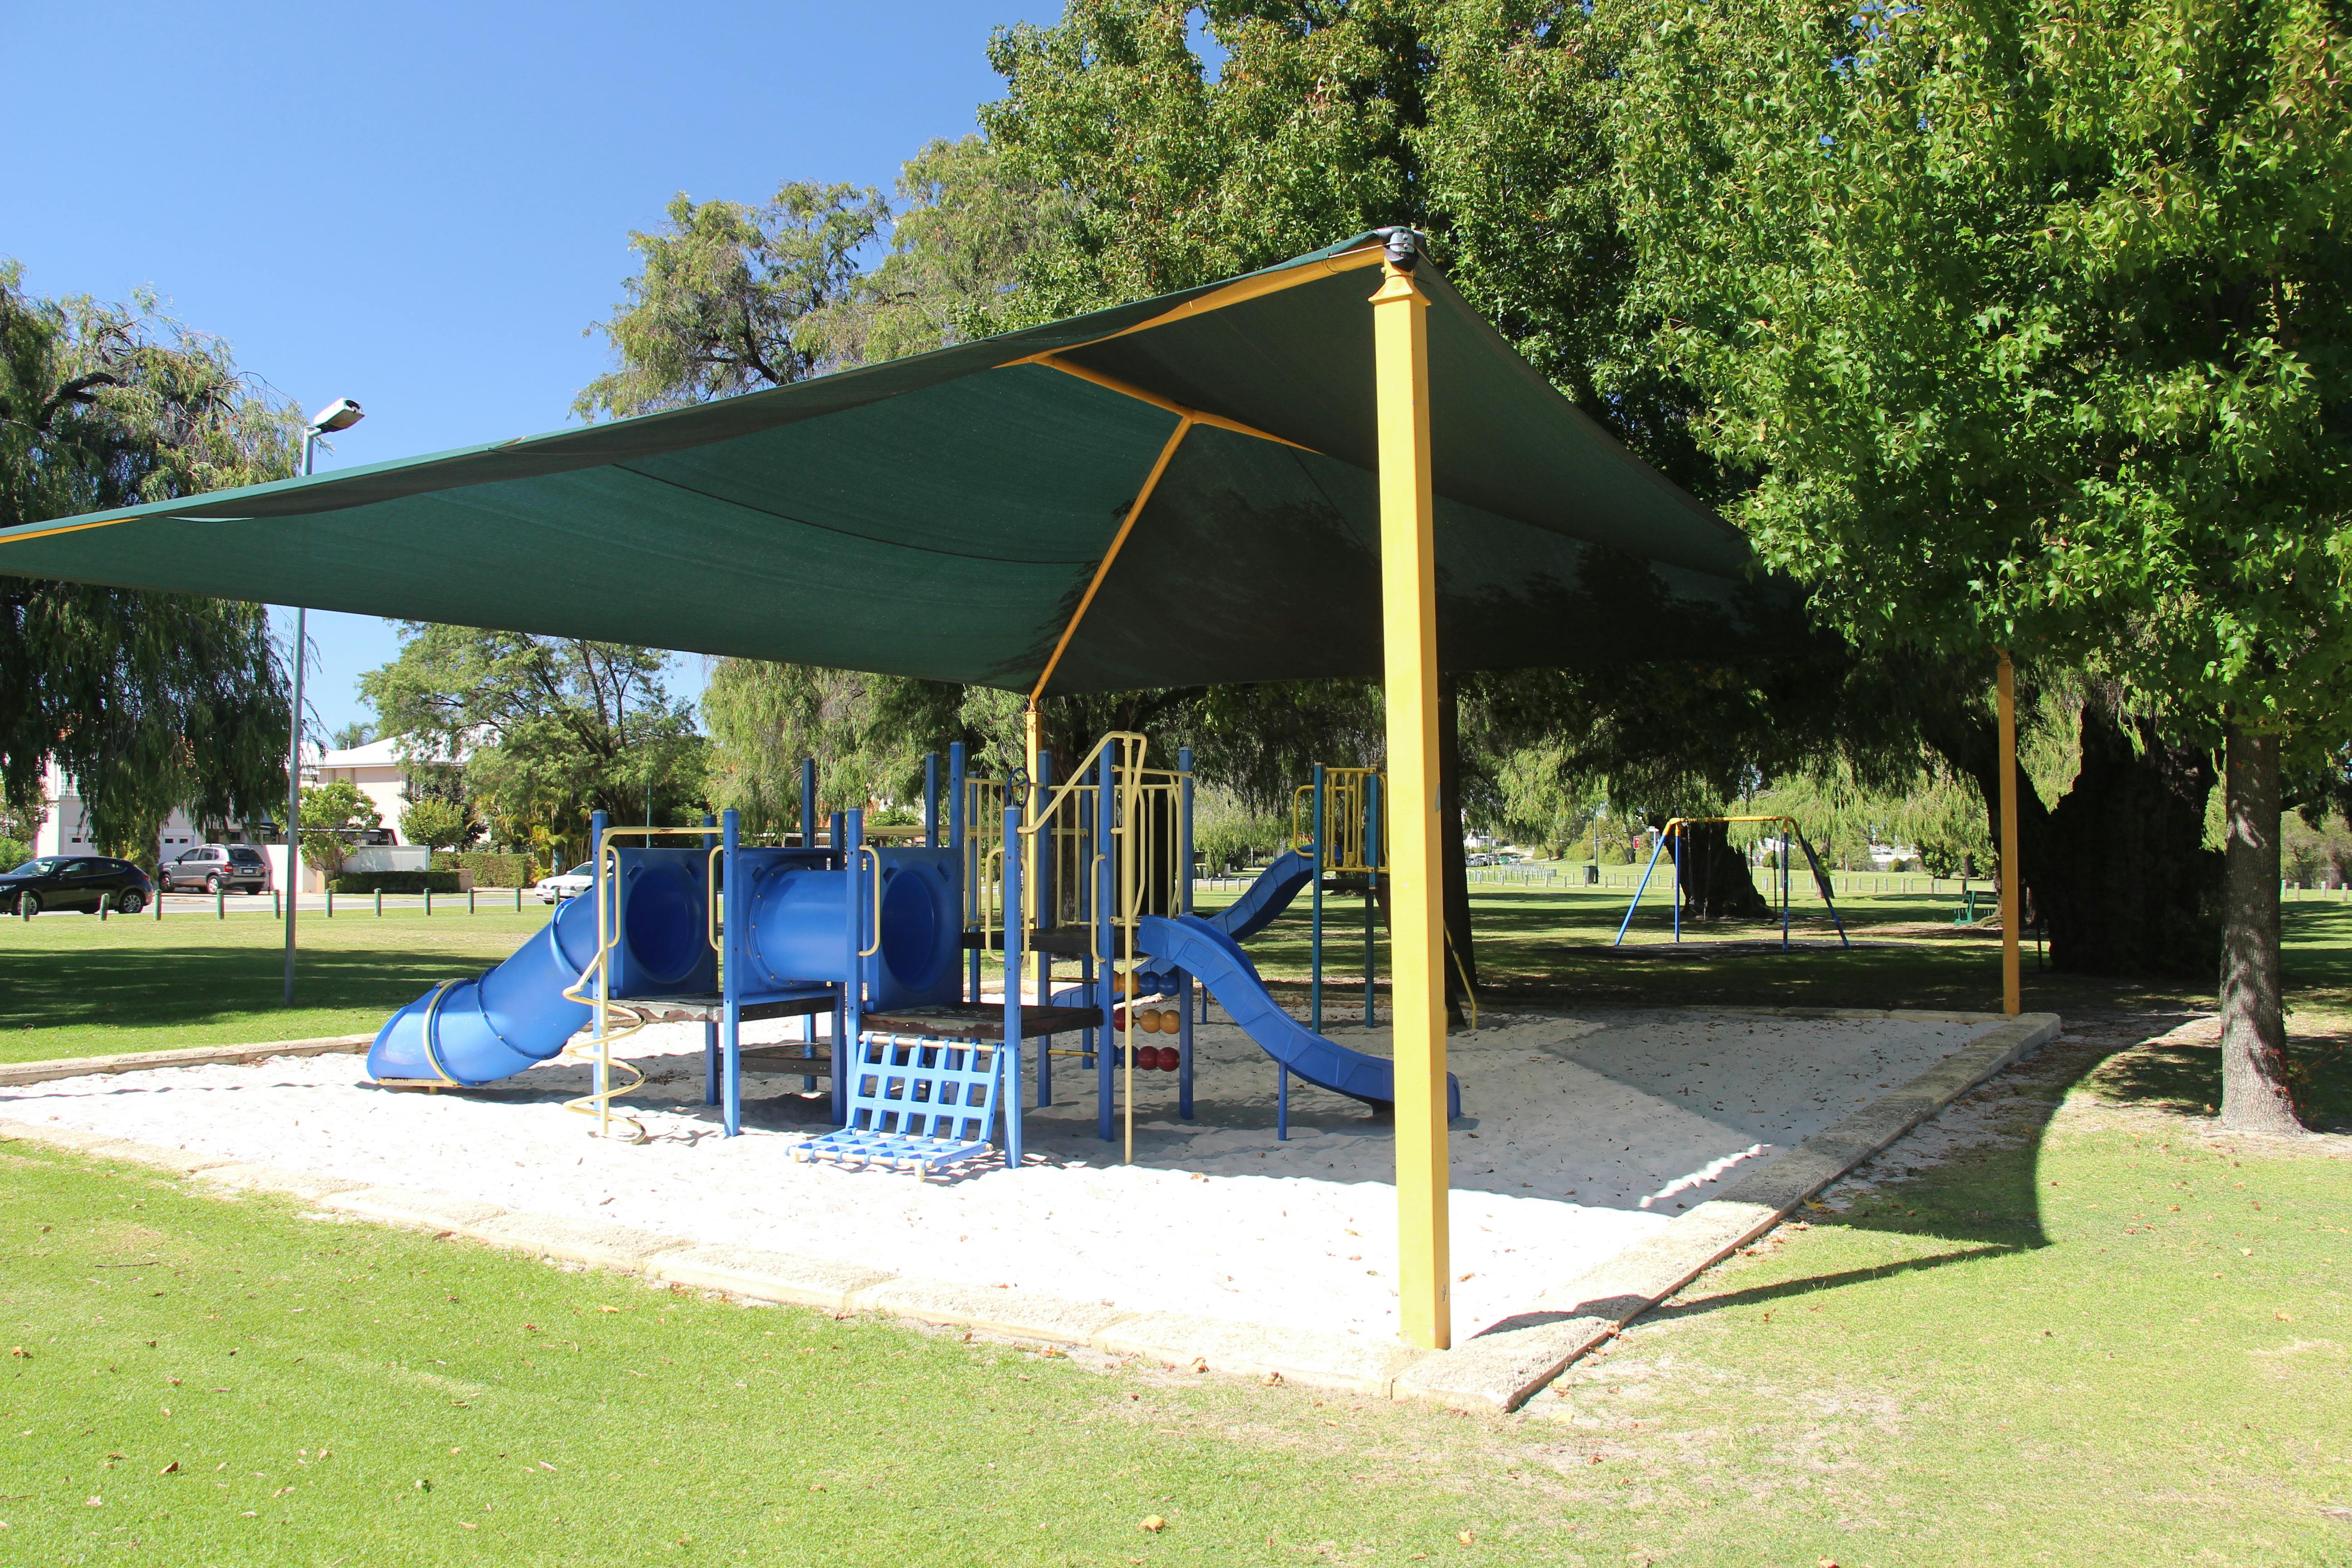 Olives Reserve playground